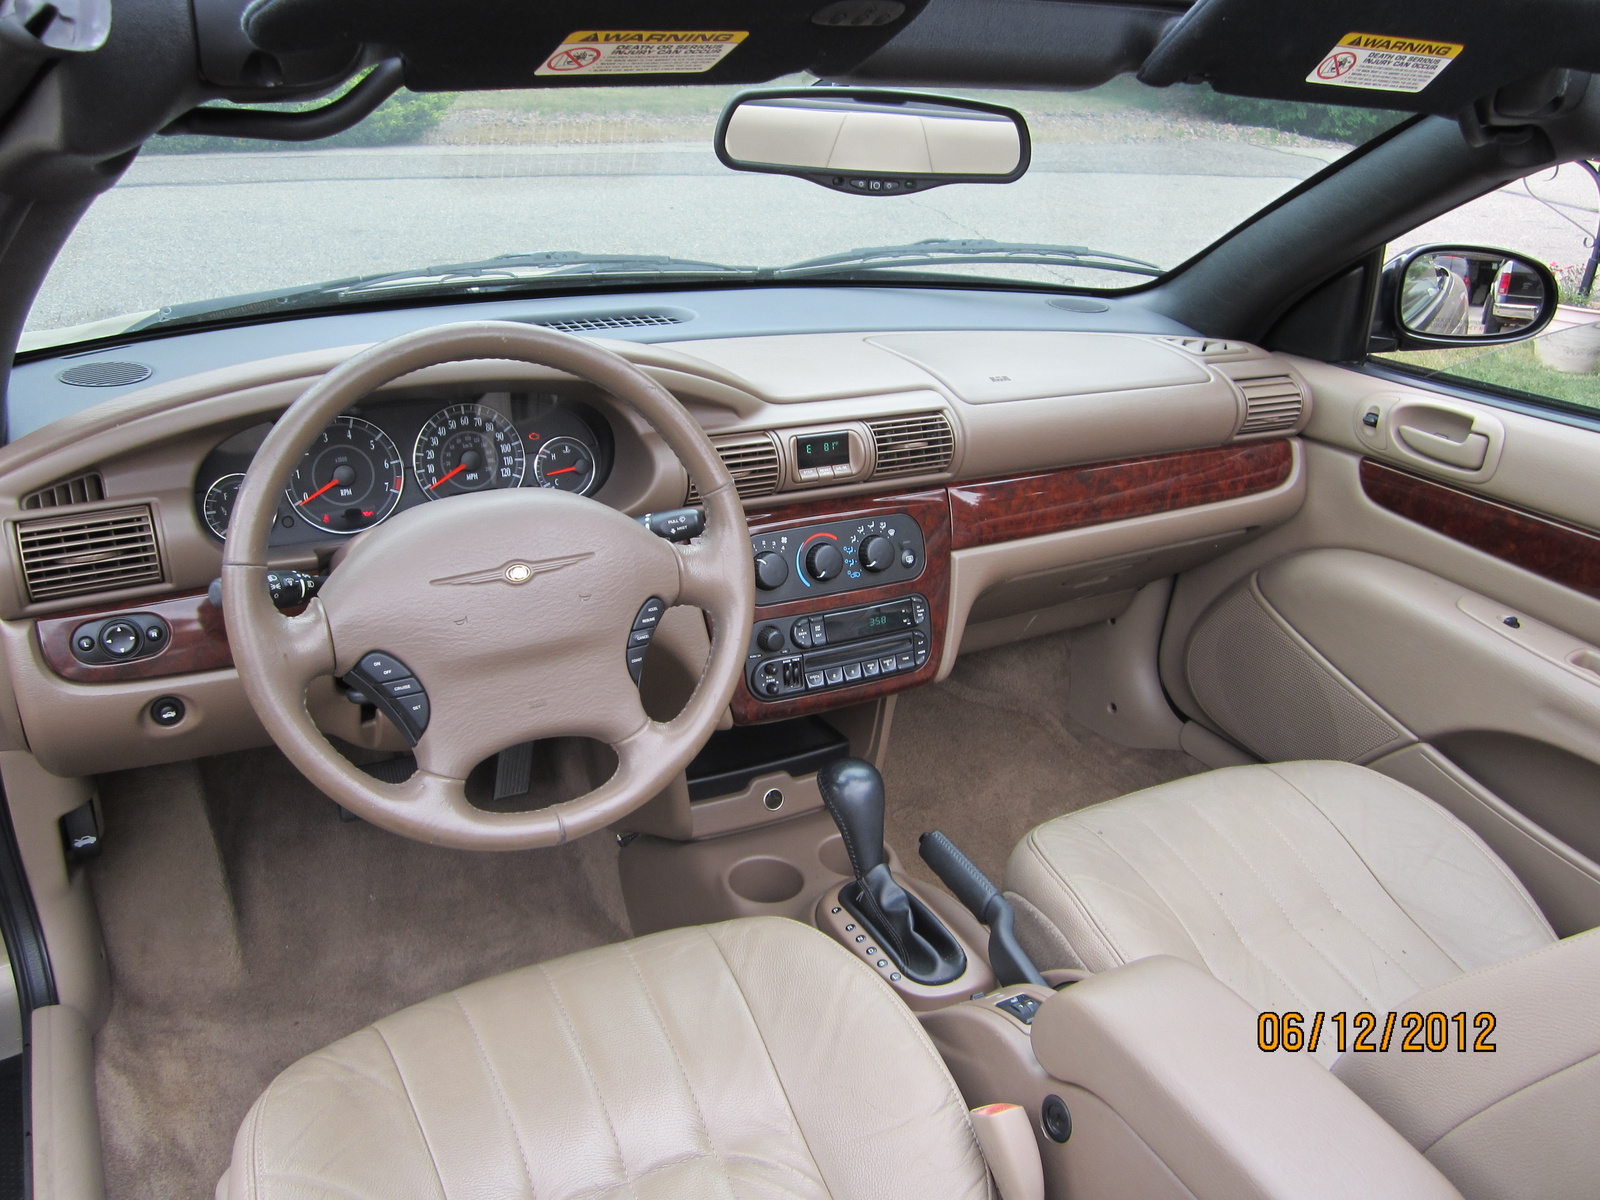 1999 Chrysler sebring convertible manual